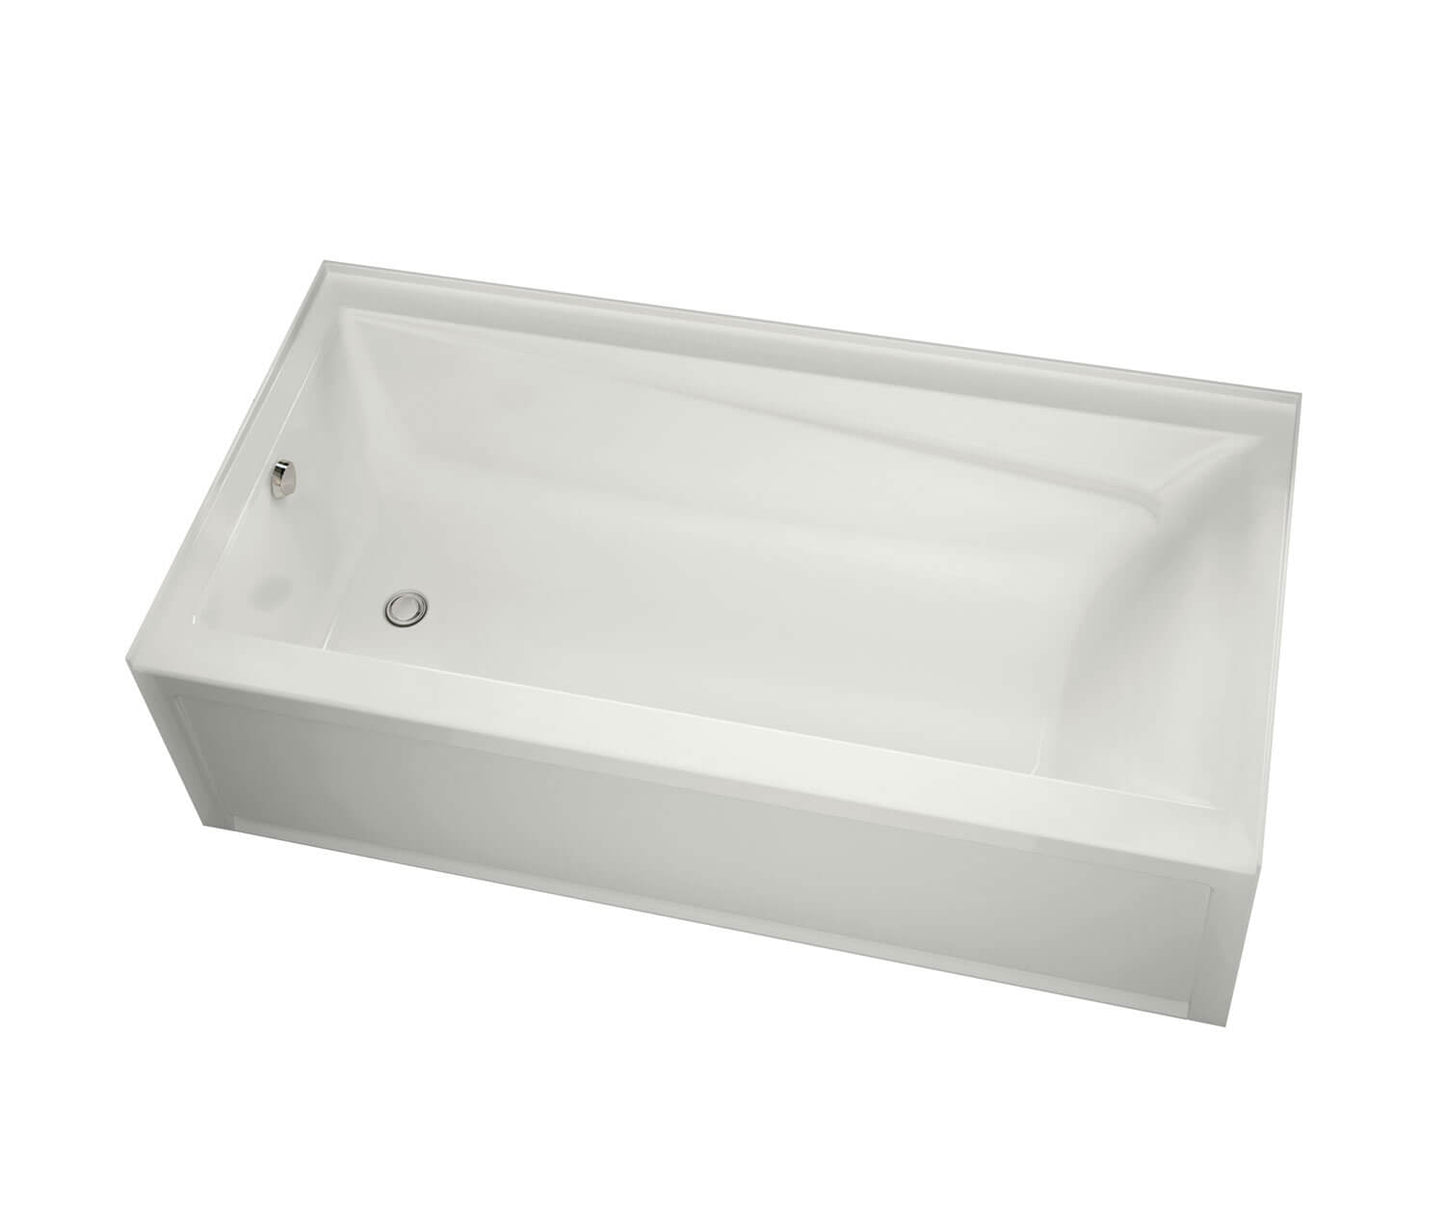 Maax Exhibit 60 x 32 IFS AFR Acrylic Alcove Left-Hand Drain Bathtub in White 105512